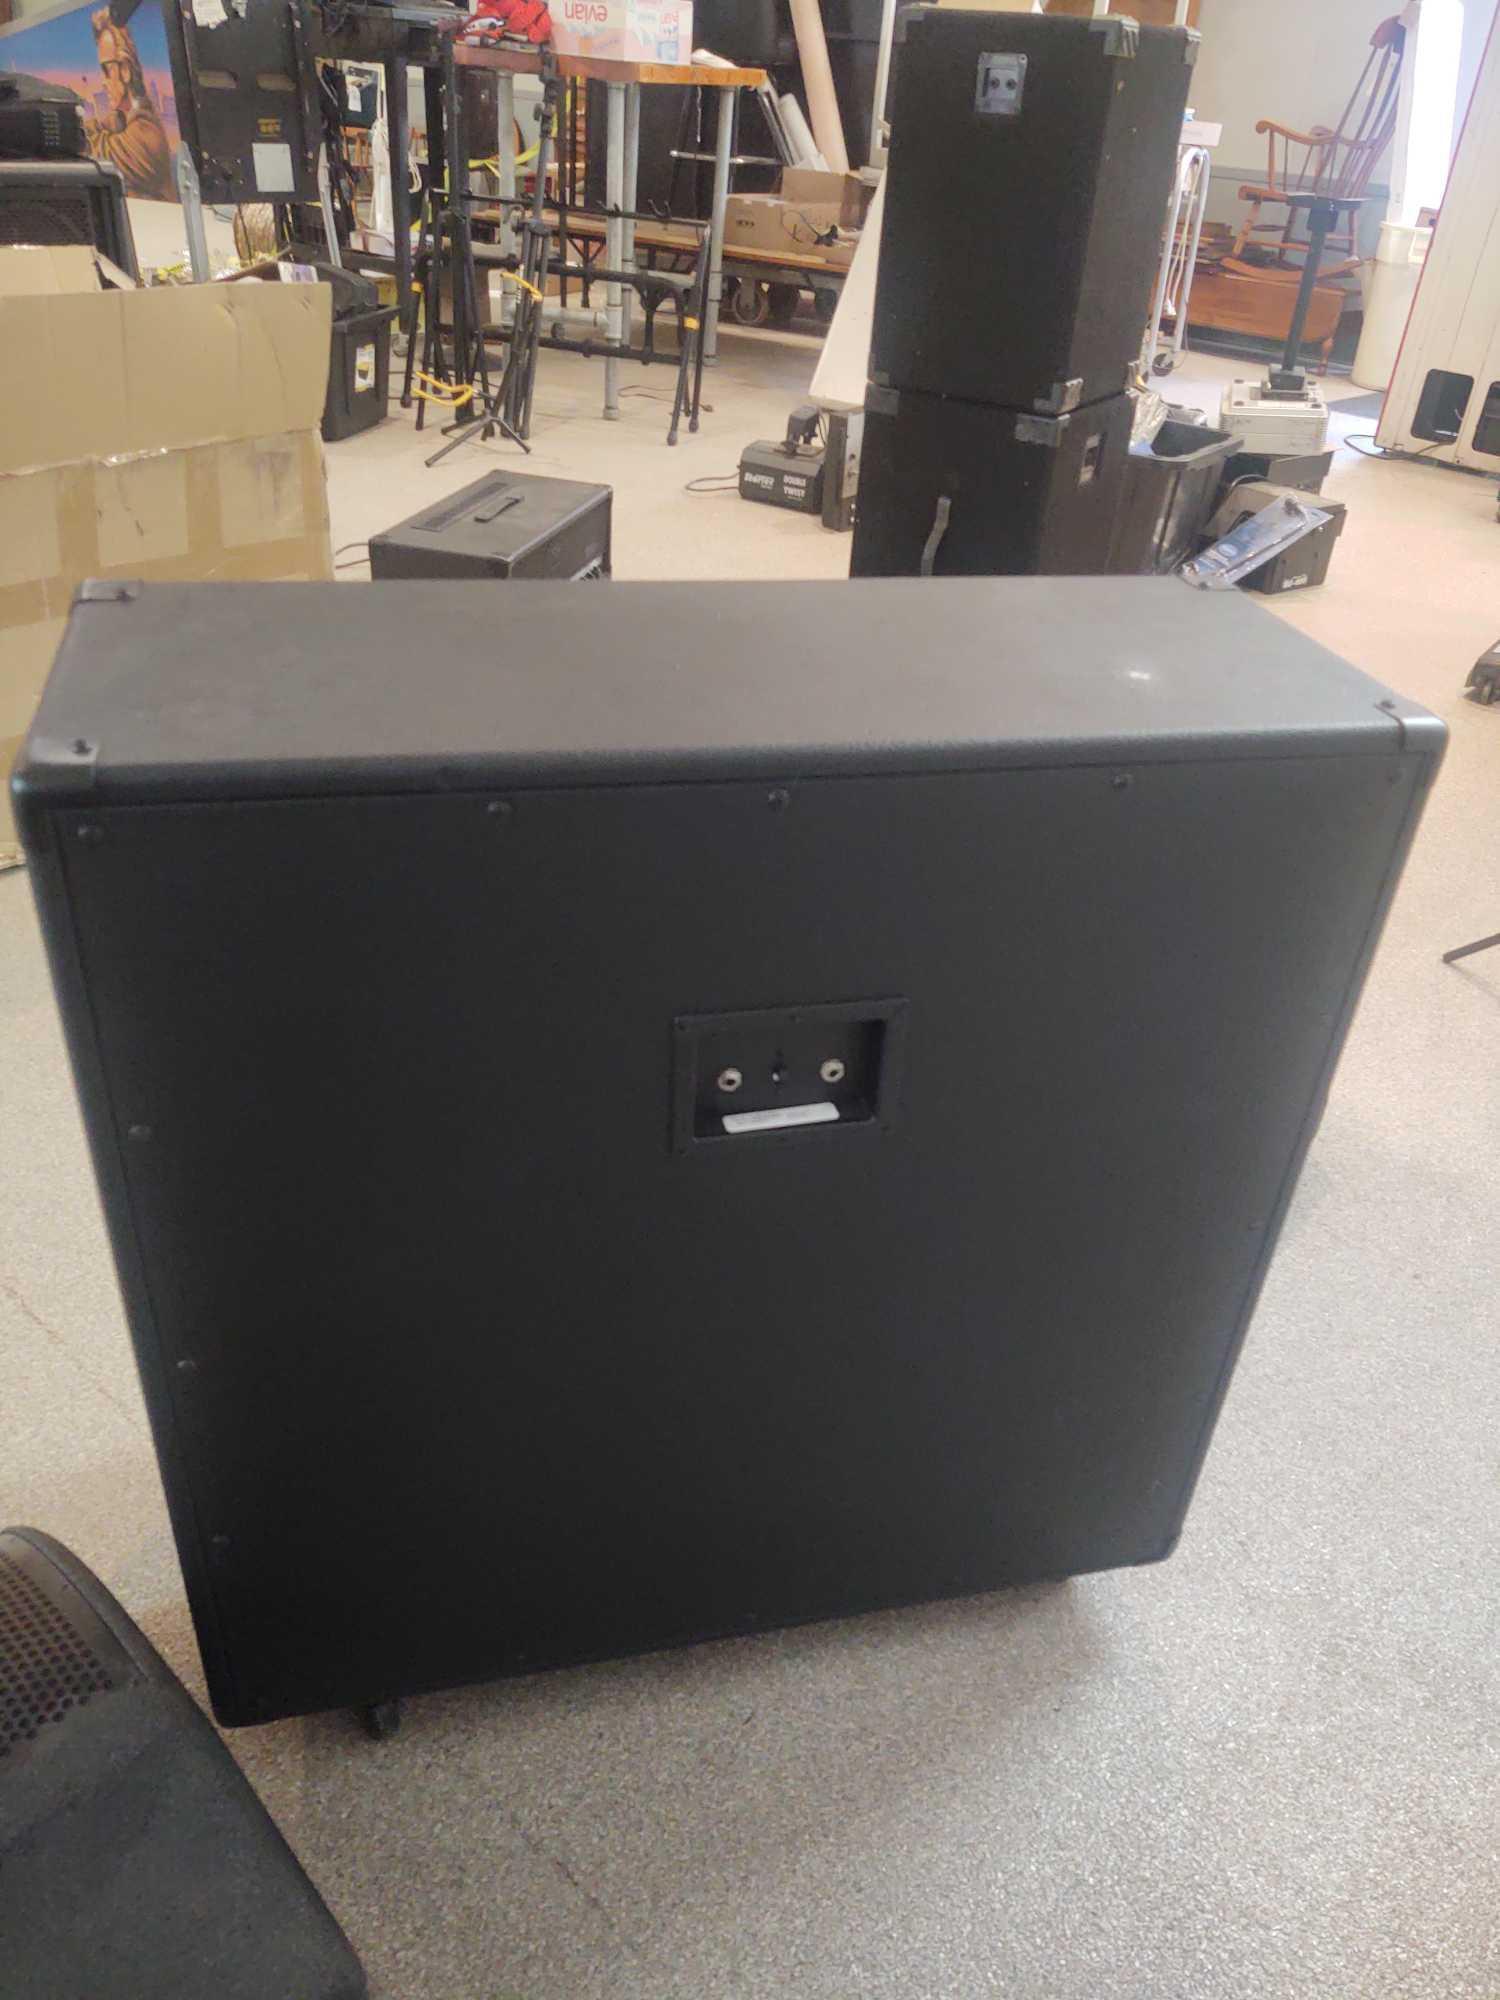 Peavy 6505 Speaker Cabinet w/ Peavy 6505 Tube Amplifier & 2 Stage Monitors